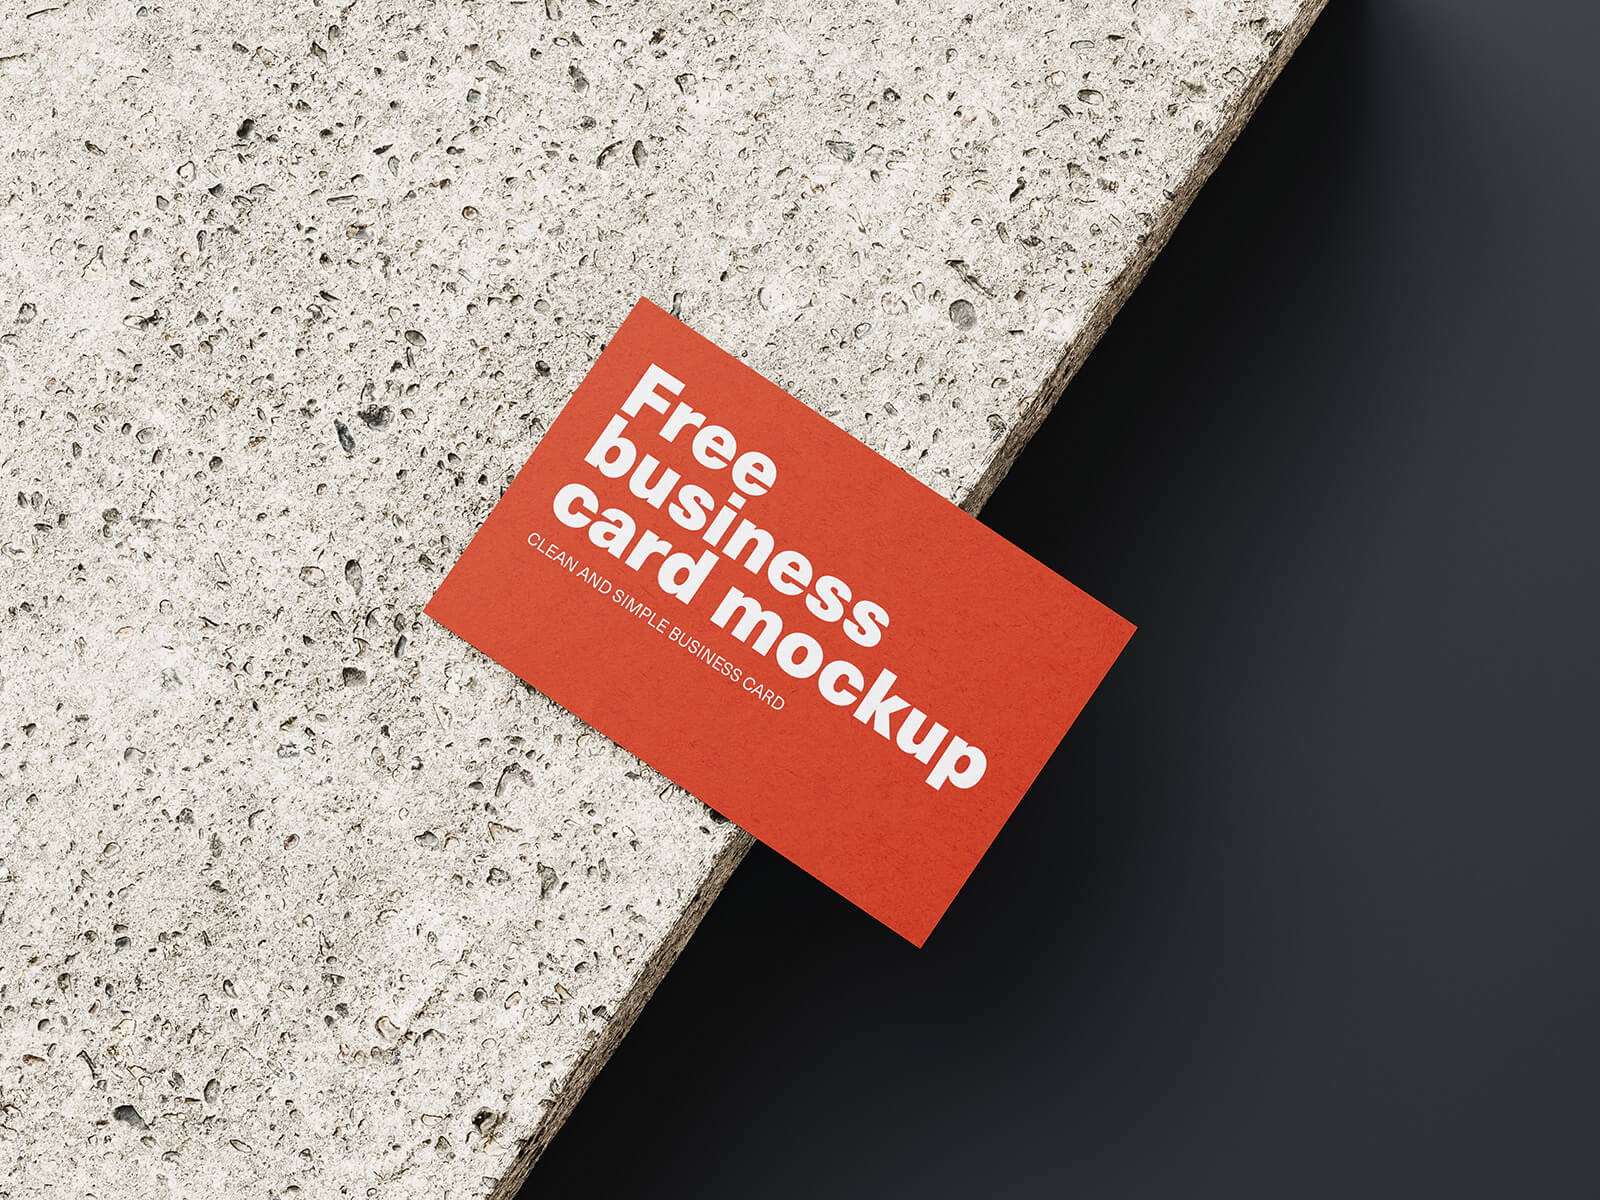 Free Premium Business Card On A Brick Mockup PSD